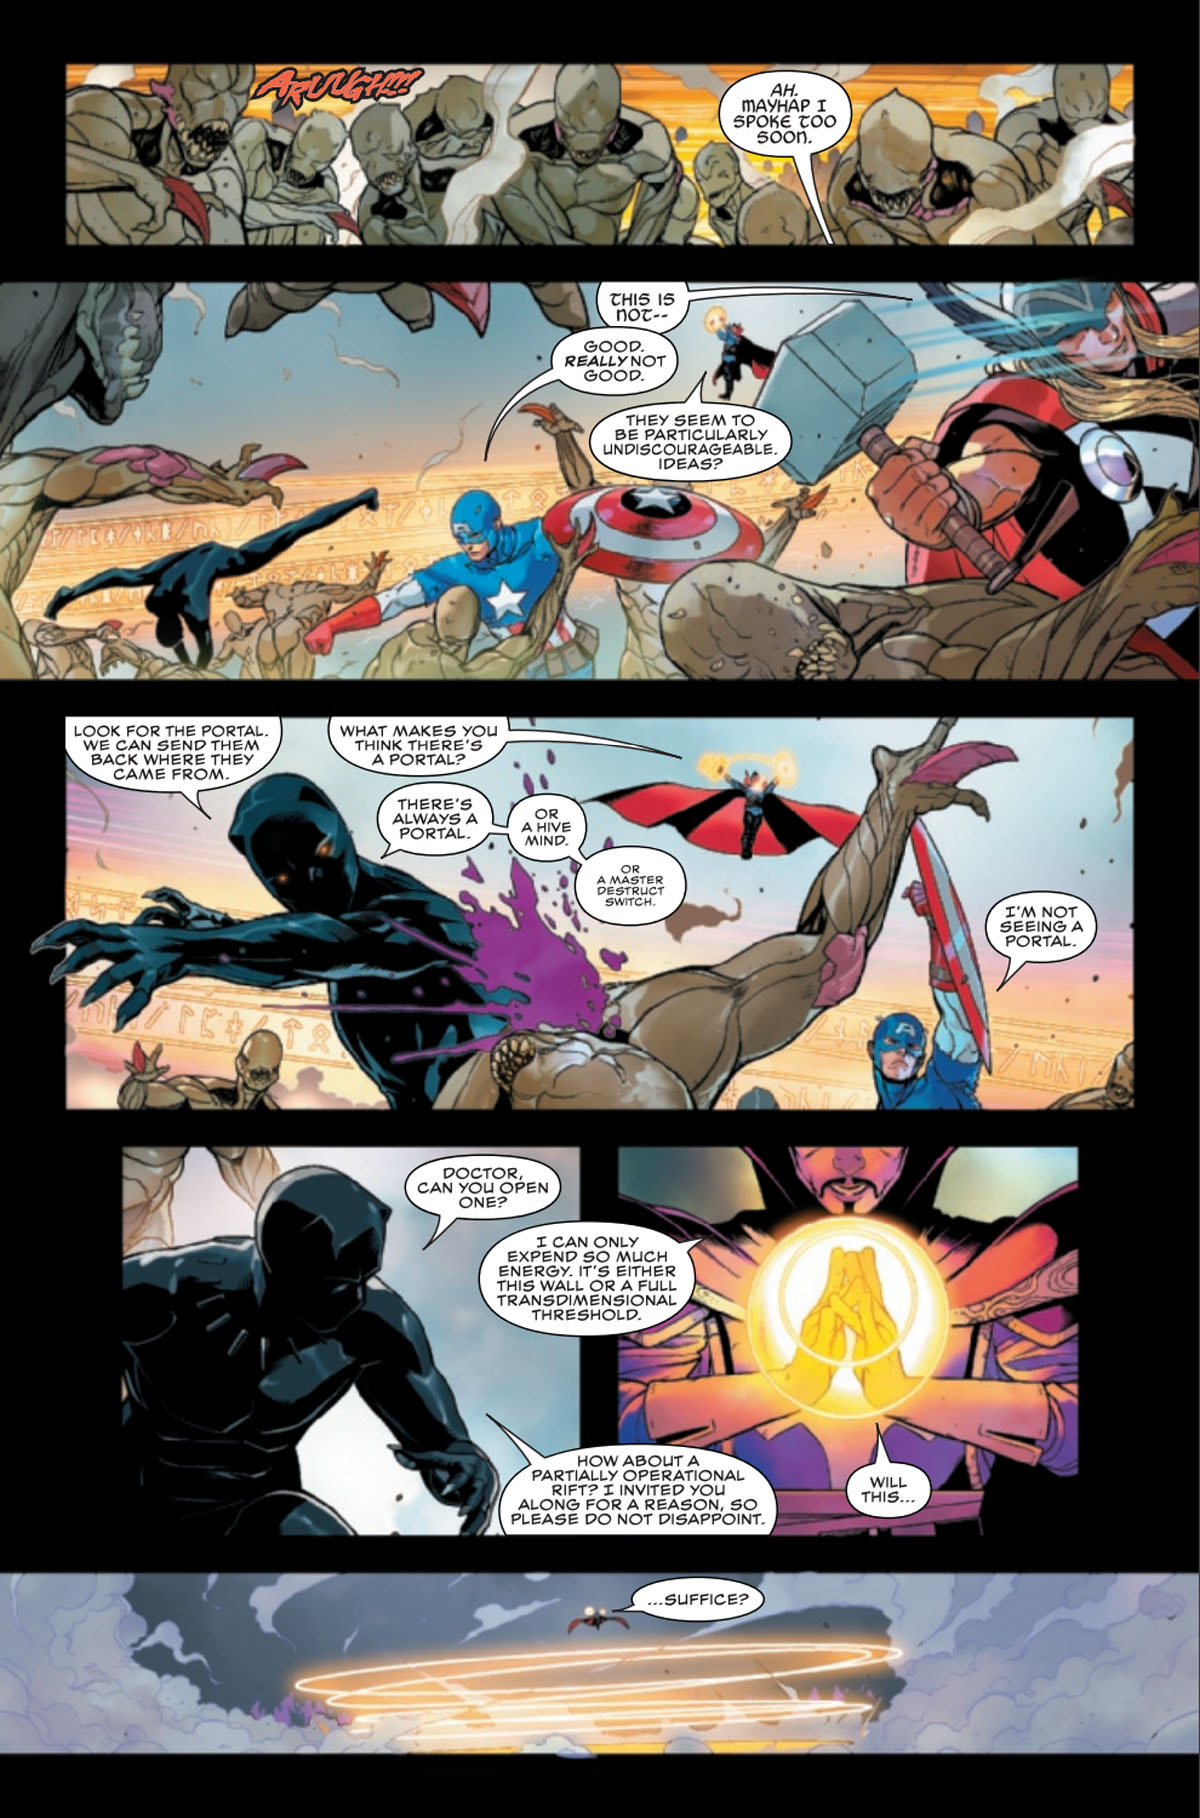 Black Panther #1 page 5